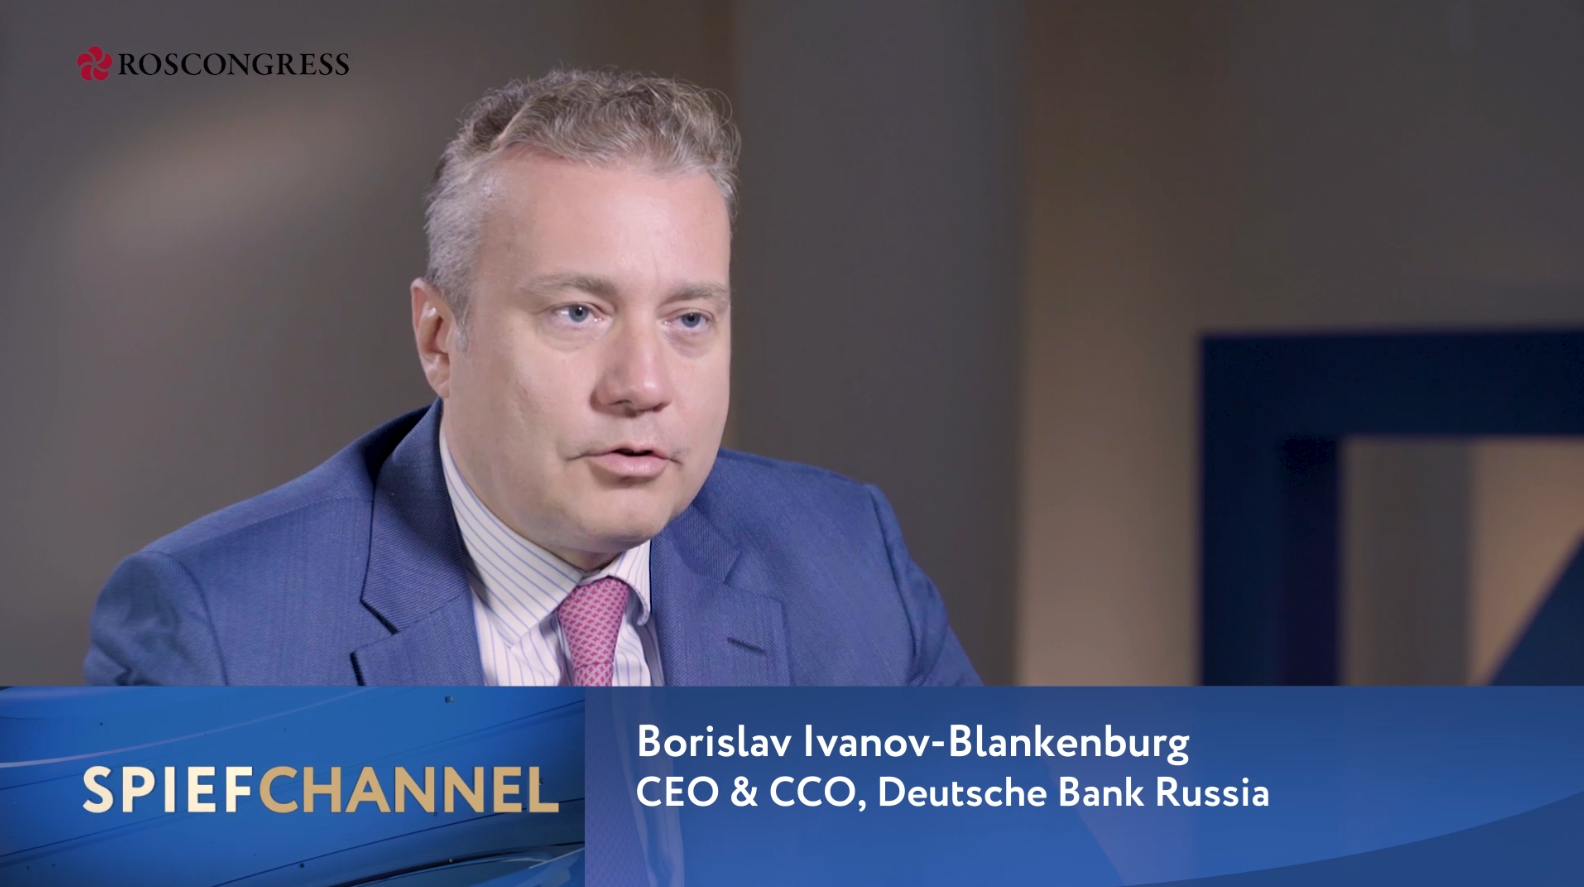 Borislav Ivanov-Blankenburg, CEO & CCO, Deutsche Bank in Russia